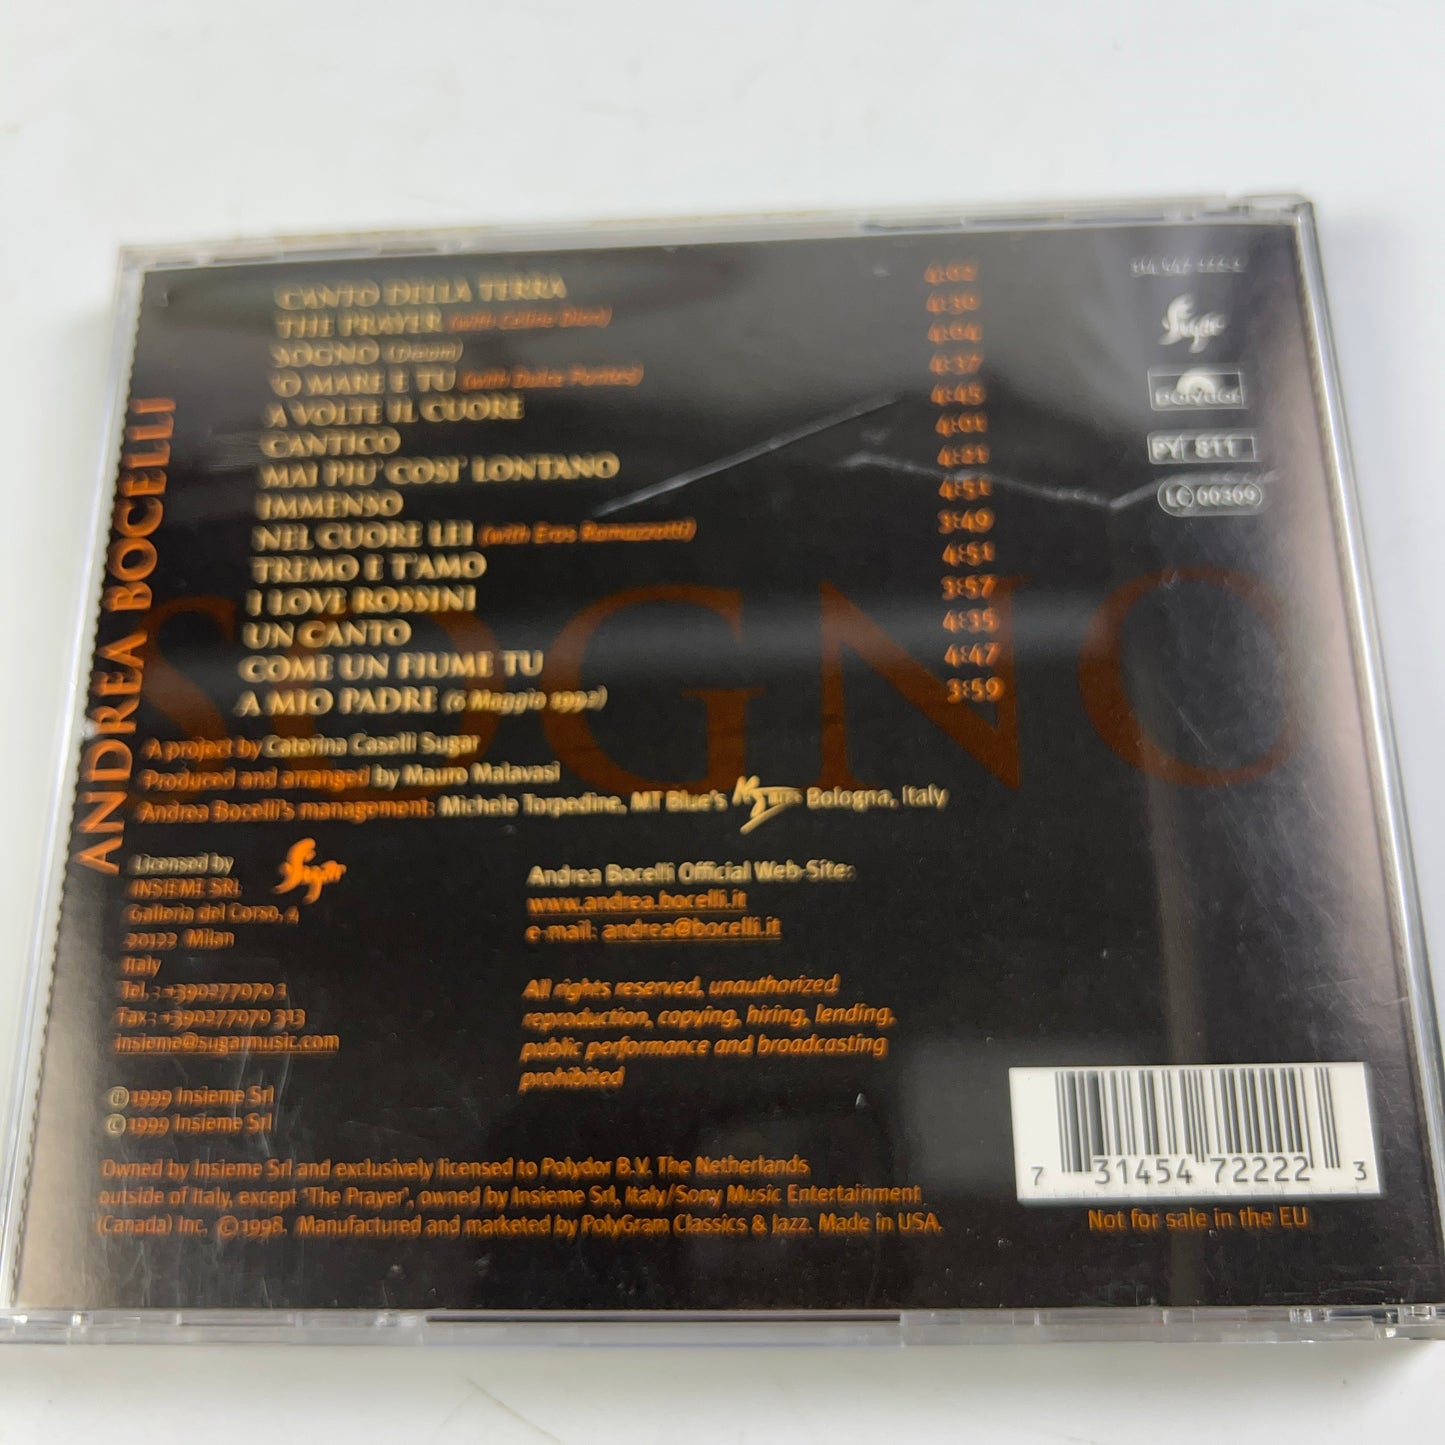 Sogno by Bocelli, Andrea (CD, 1999)